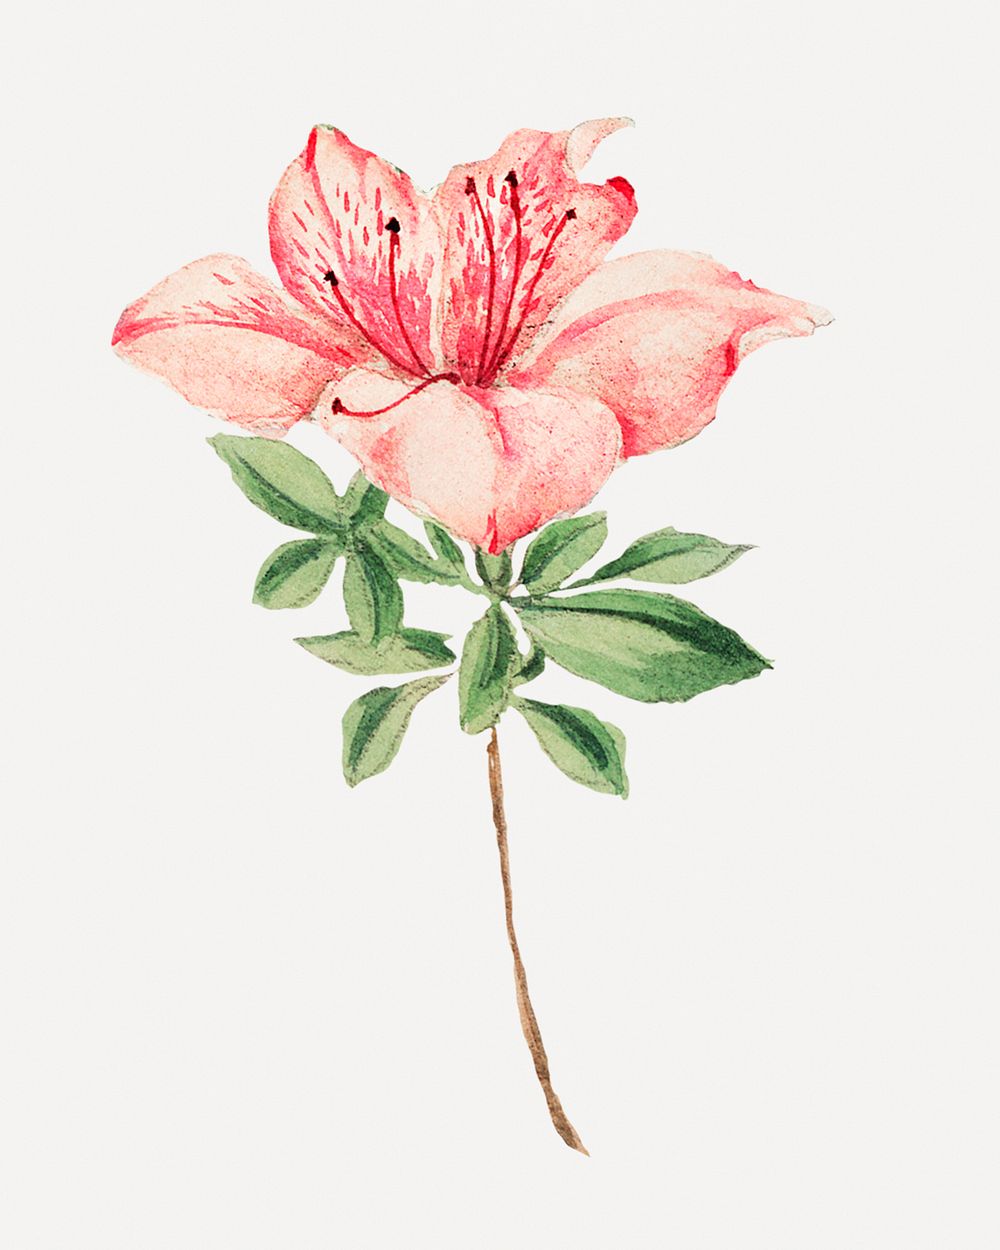 Vintage Japanese azalea flower art print, remix from artworks by Megata Morikaga